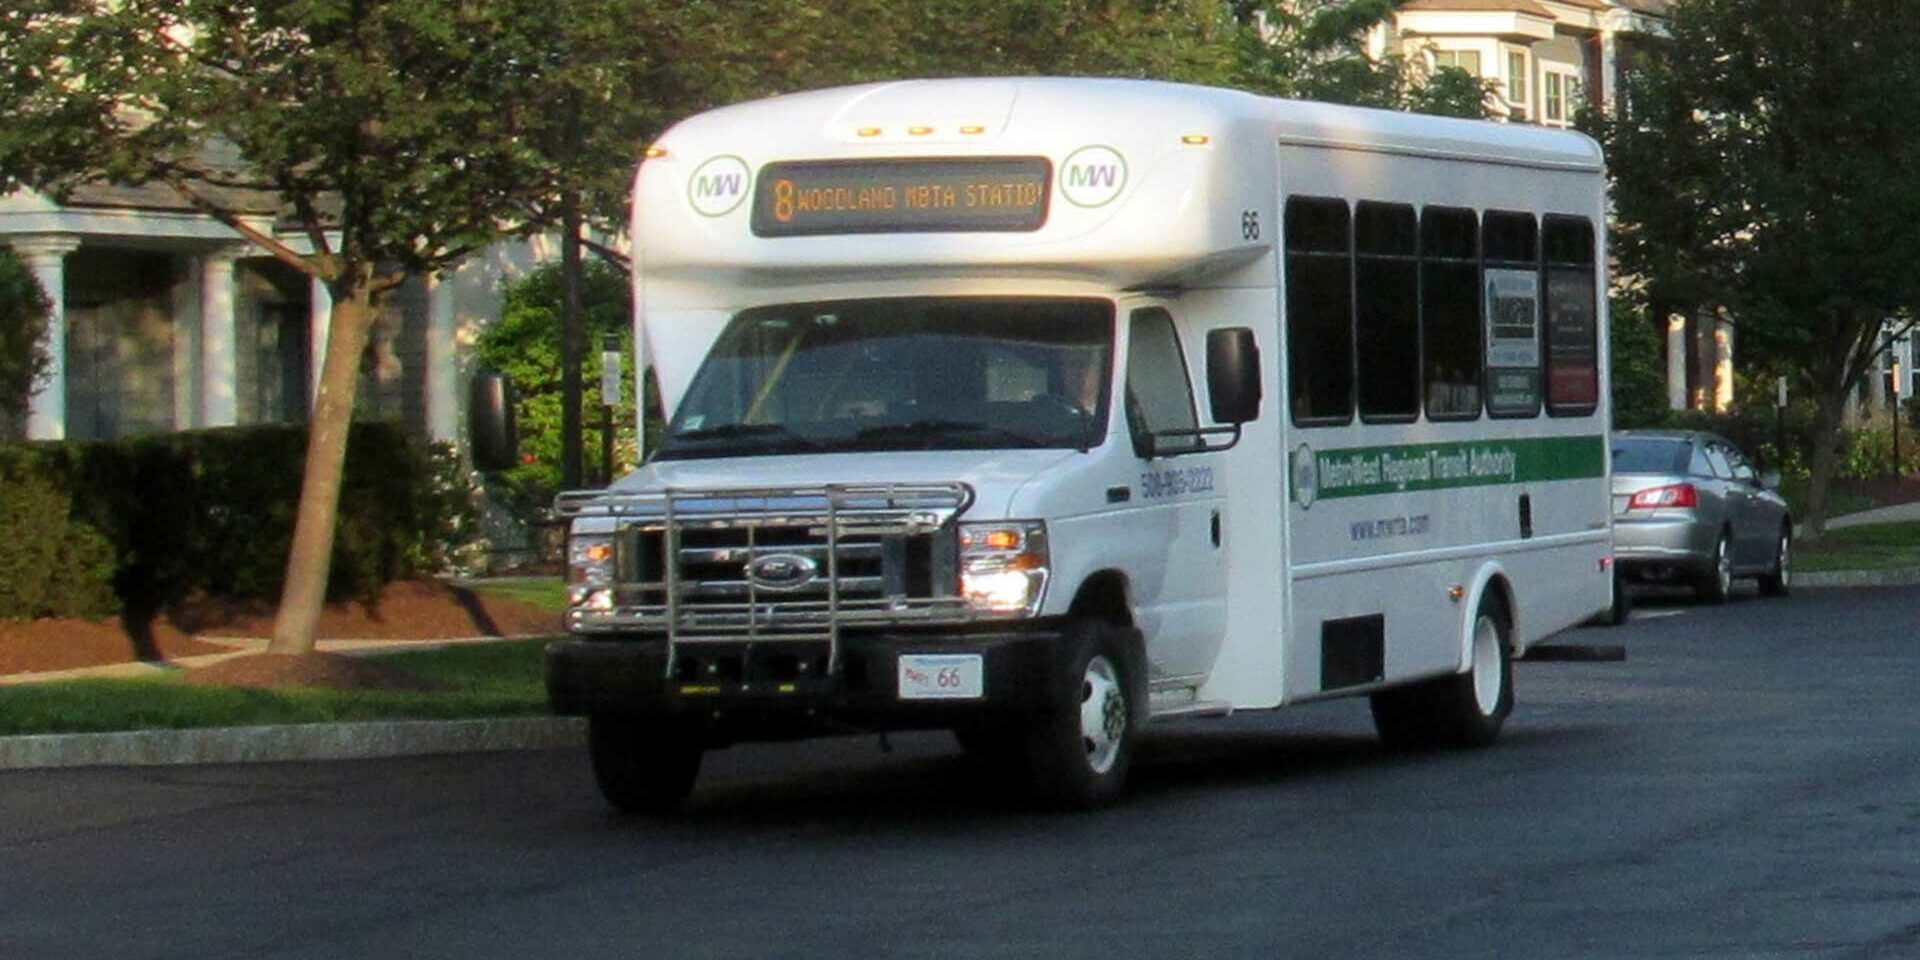 MetroWest Regional Transit Authority (MWRTA) Bus